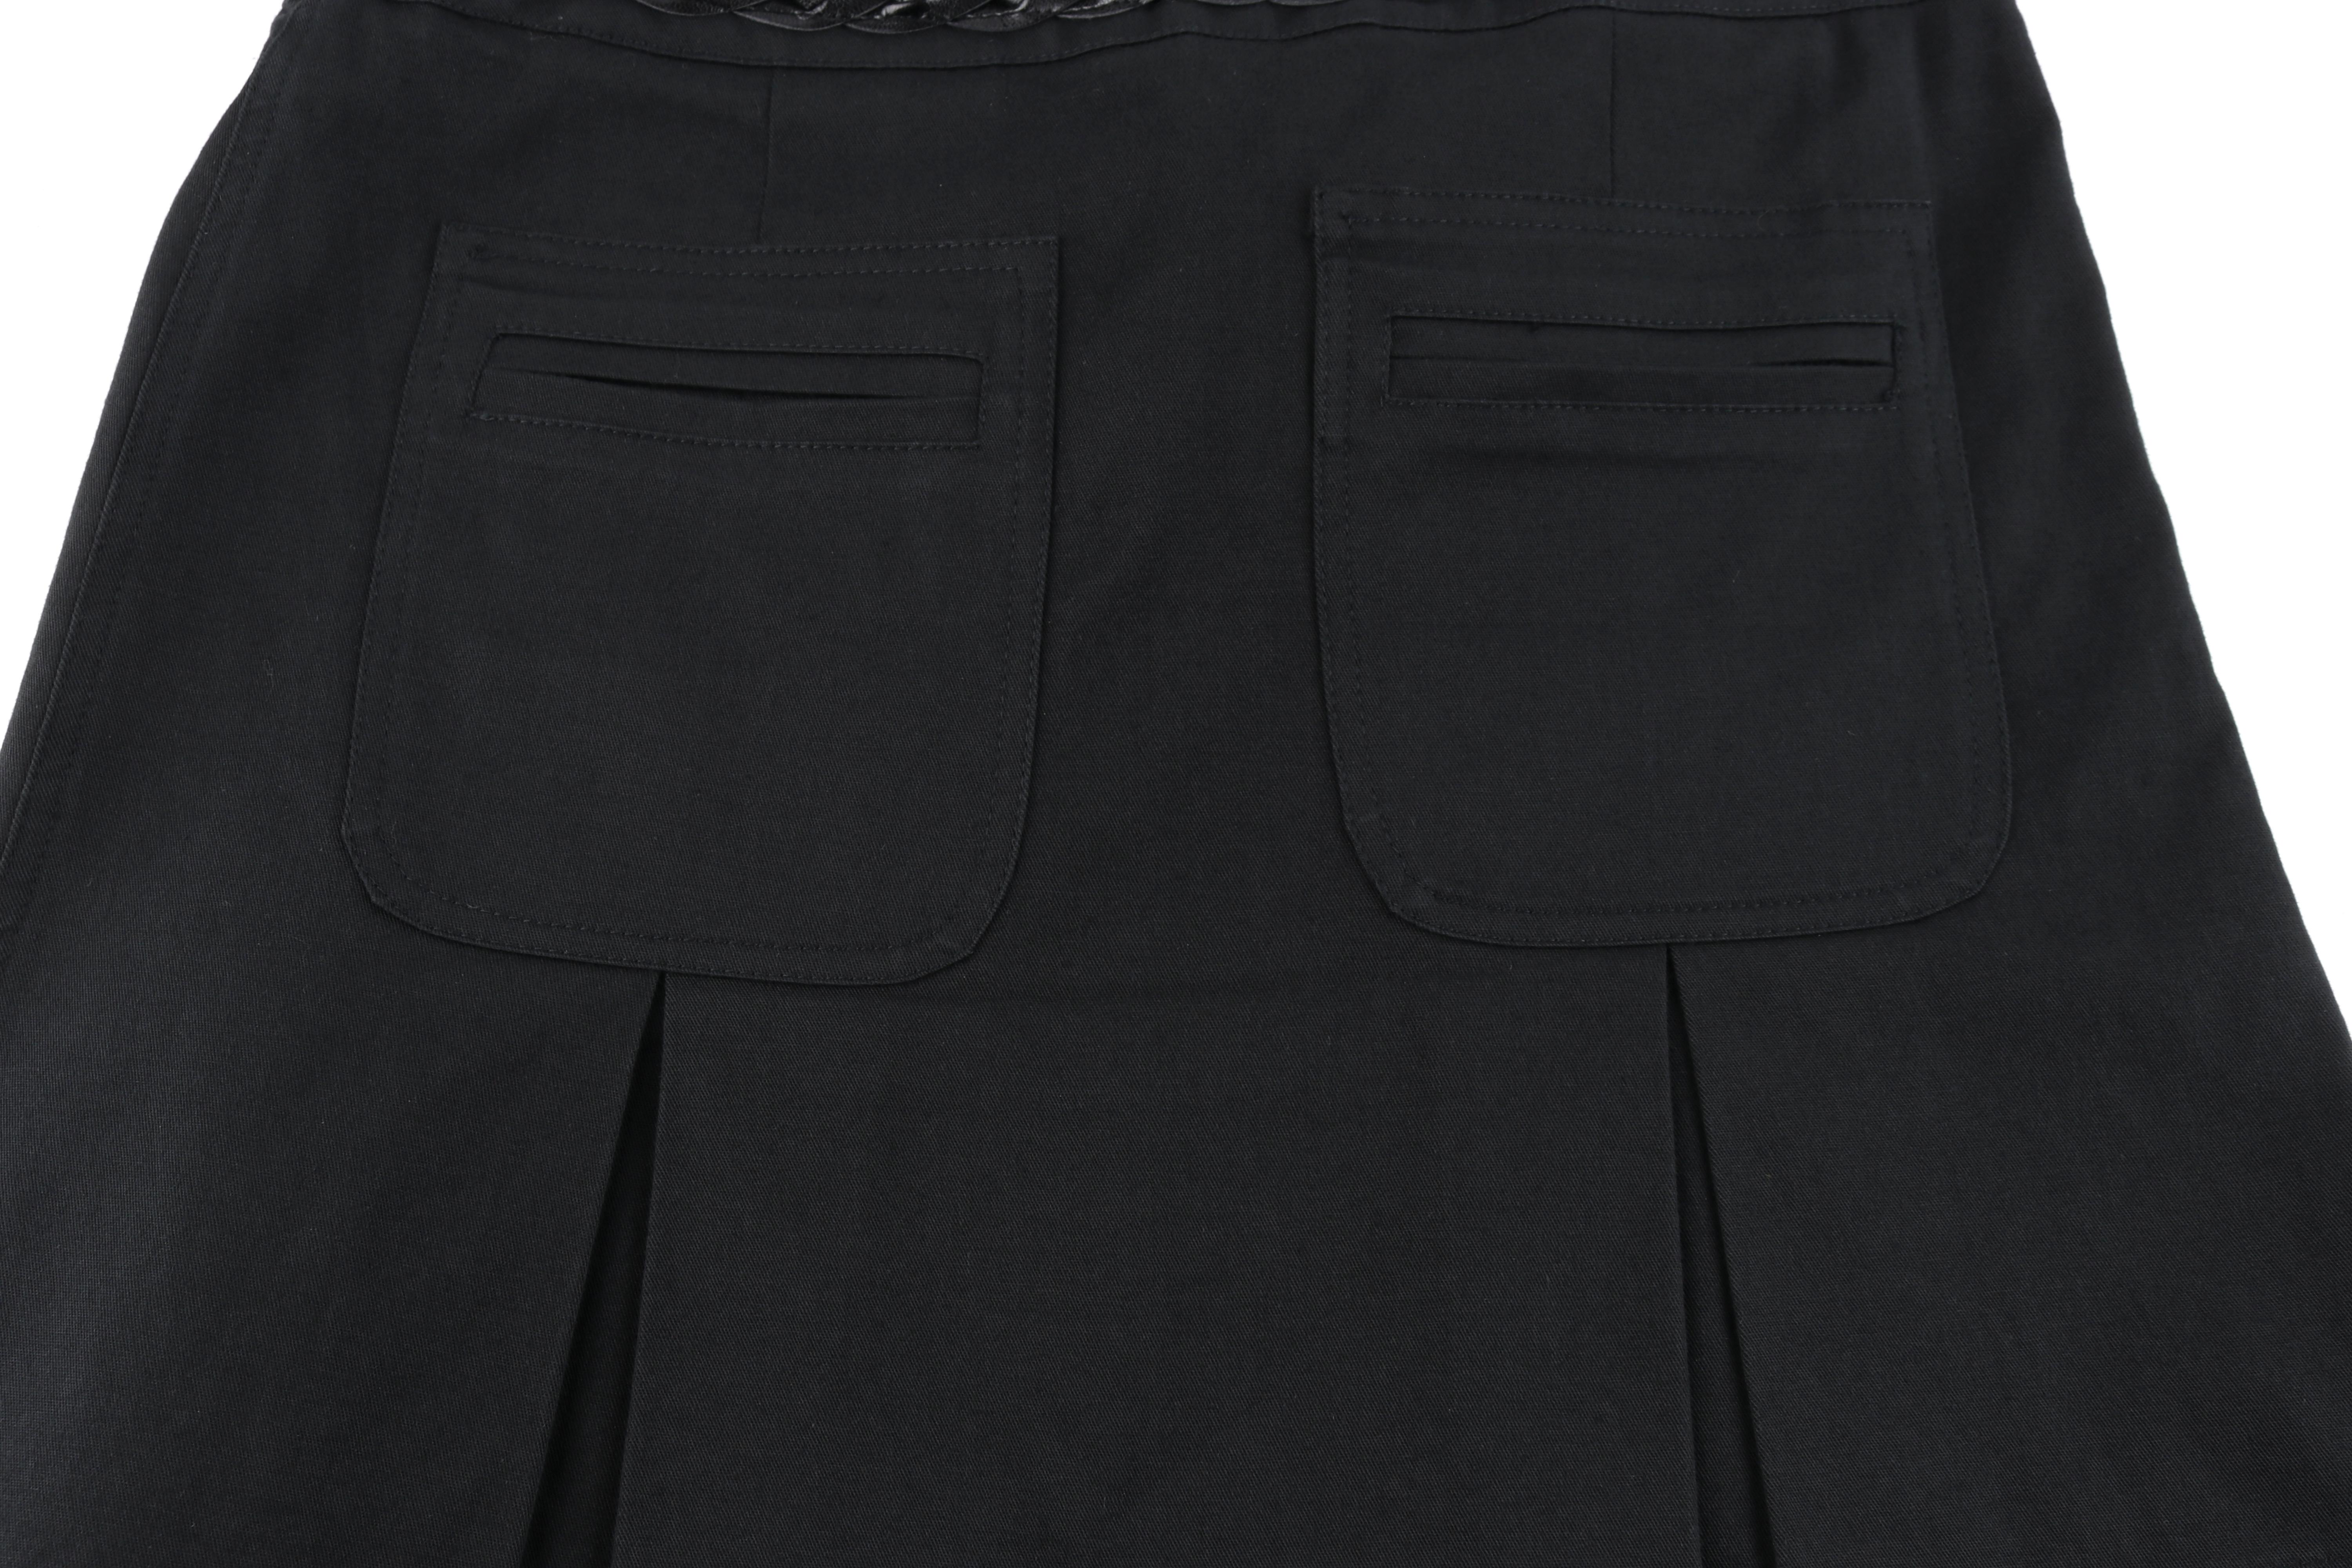 ALEXANDER McQUEEN A/W 1996 “Dante” Black Leather Braid Trim Pleated Mini Skirt For Sale 3